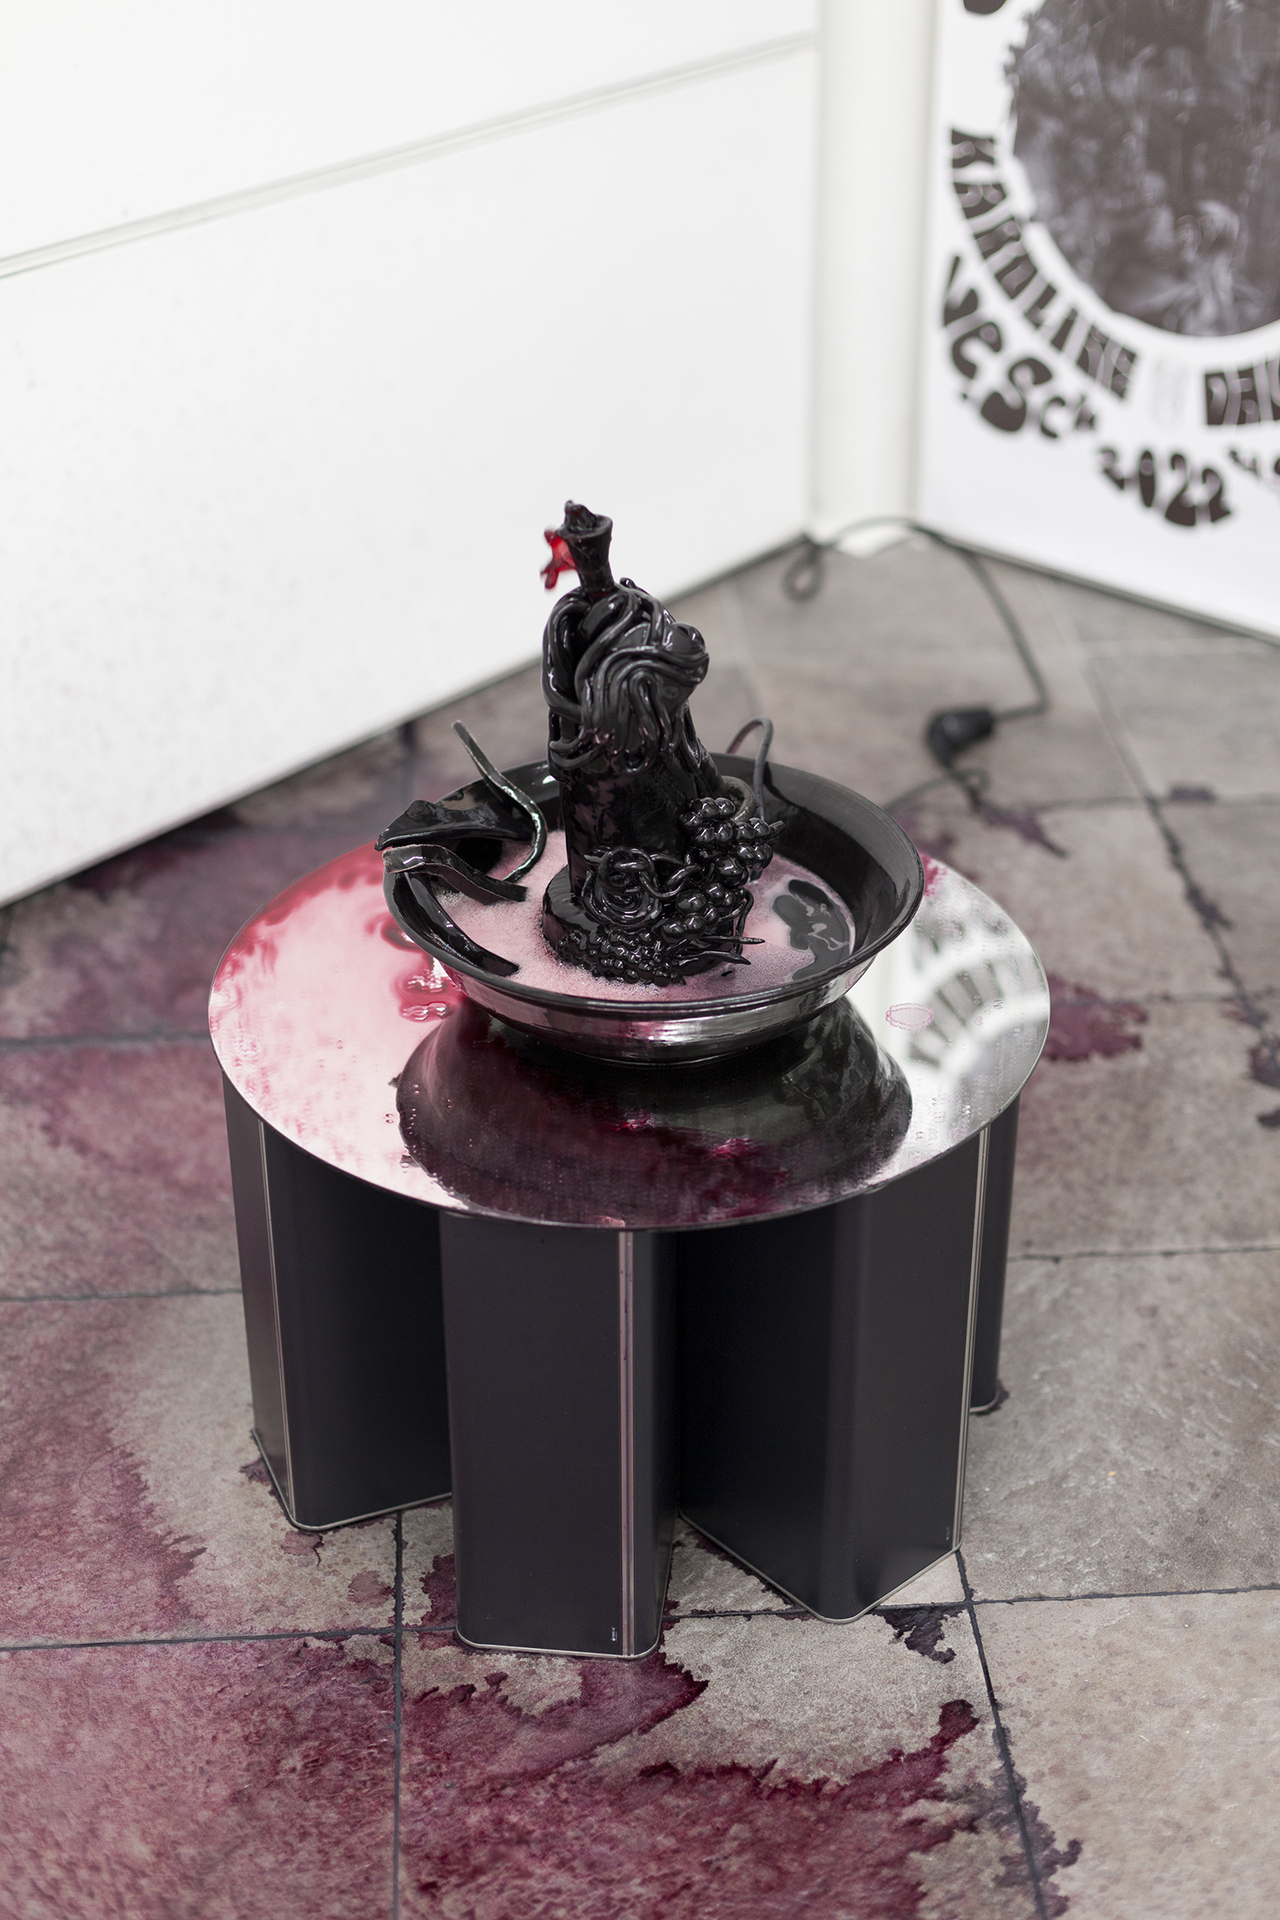 Karoline Dausien, Fountain 3, 2022, glazed ceramics, table, mirror, well pump, red wine